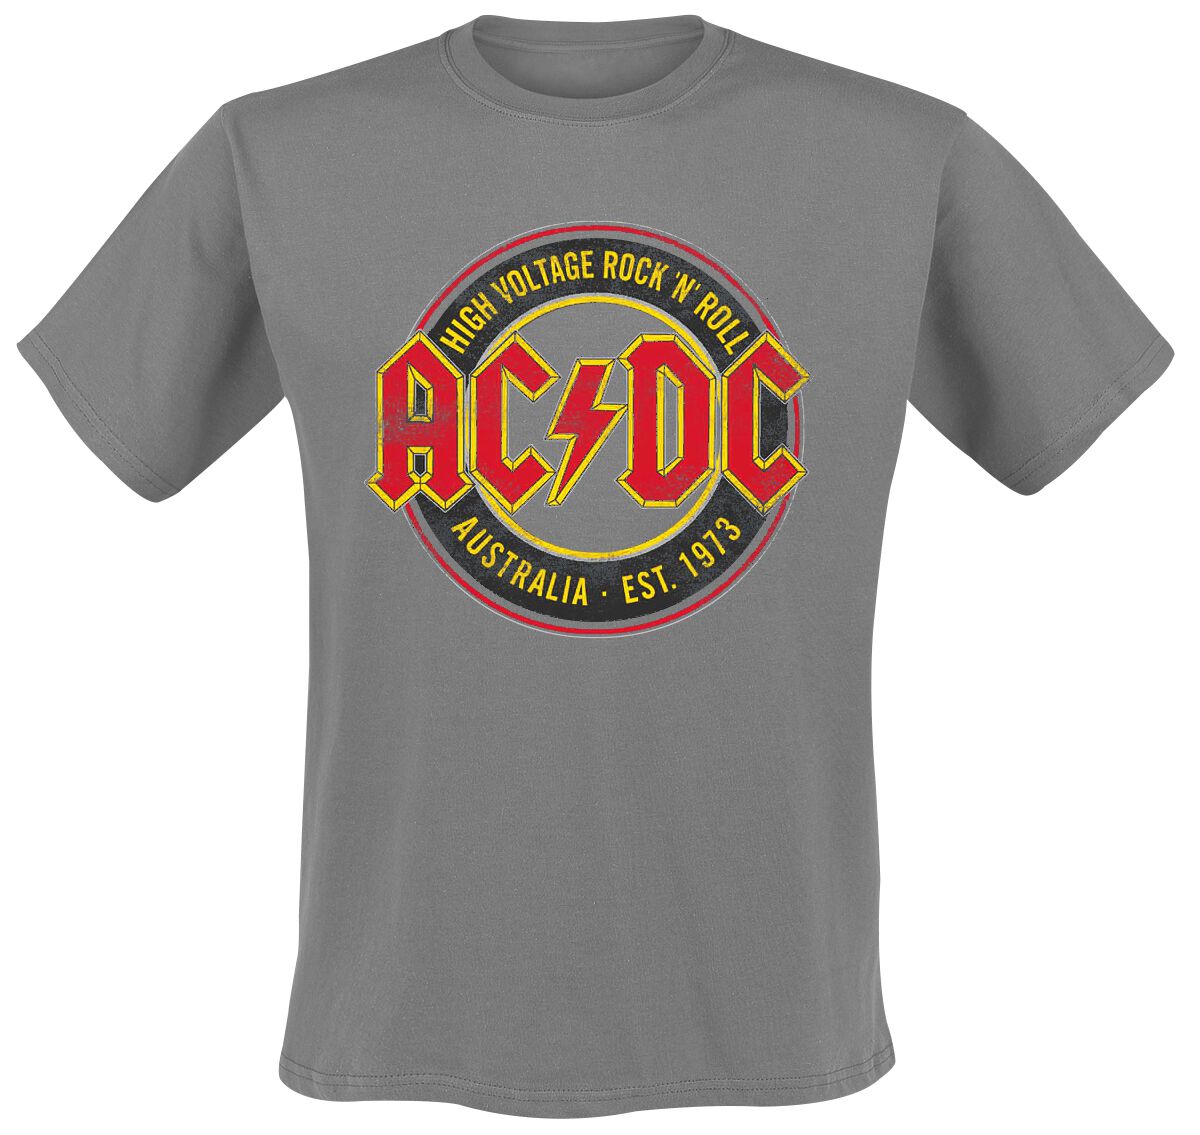 AC/DC High Voltage - Rock `N` Roll - Australia Est. 1973 T-Shirt grau in L